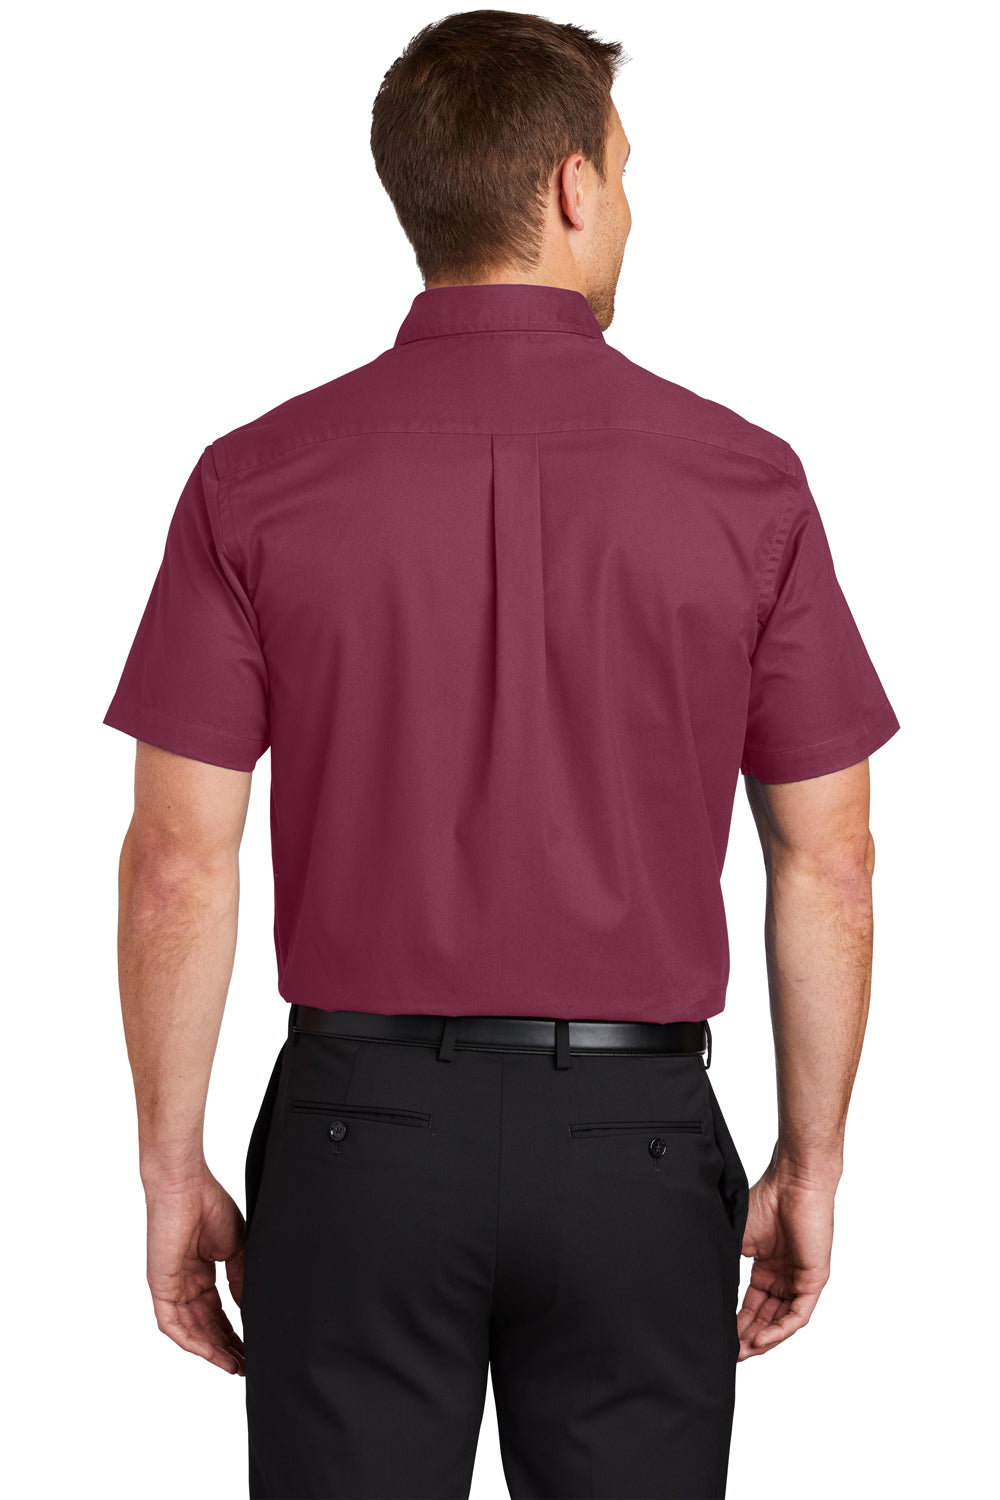 Port Authority S508/TLS508 Mens Easy Care Wrinkle Resistant Short Sleeve Button Down Shirt w/ Pocket Burgundy Back